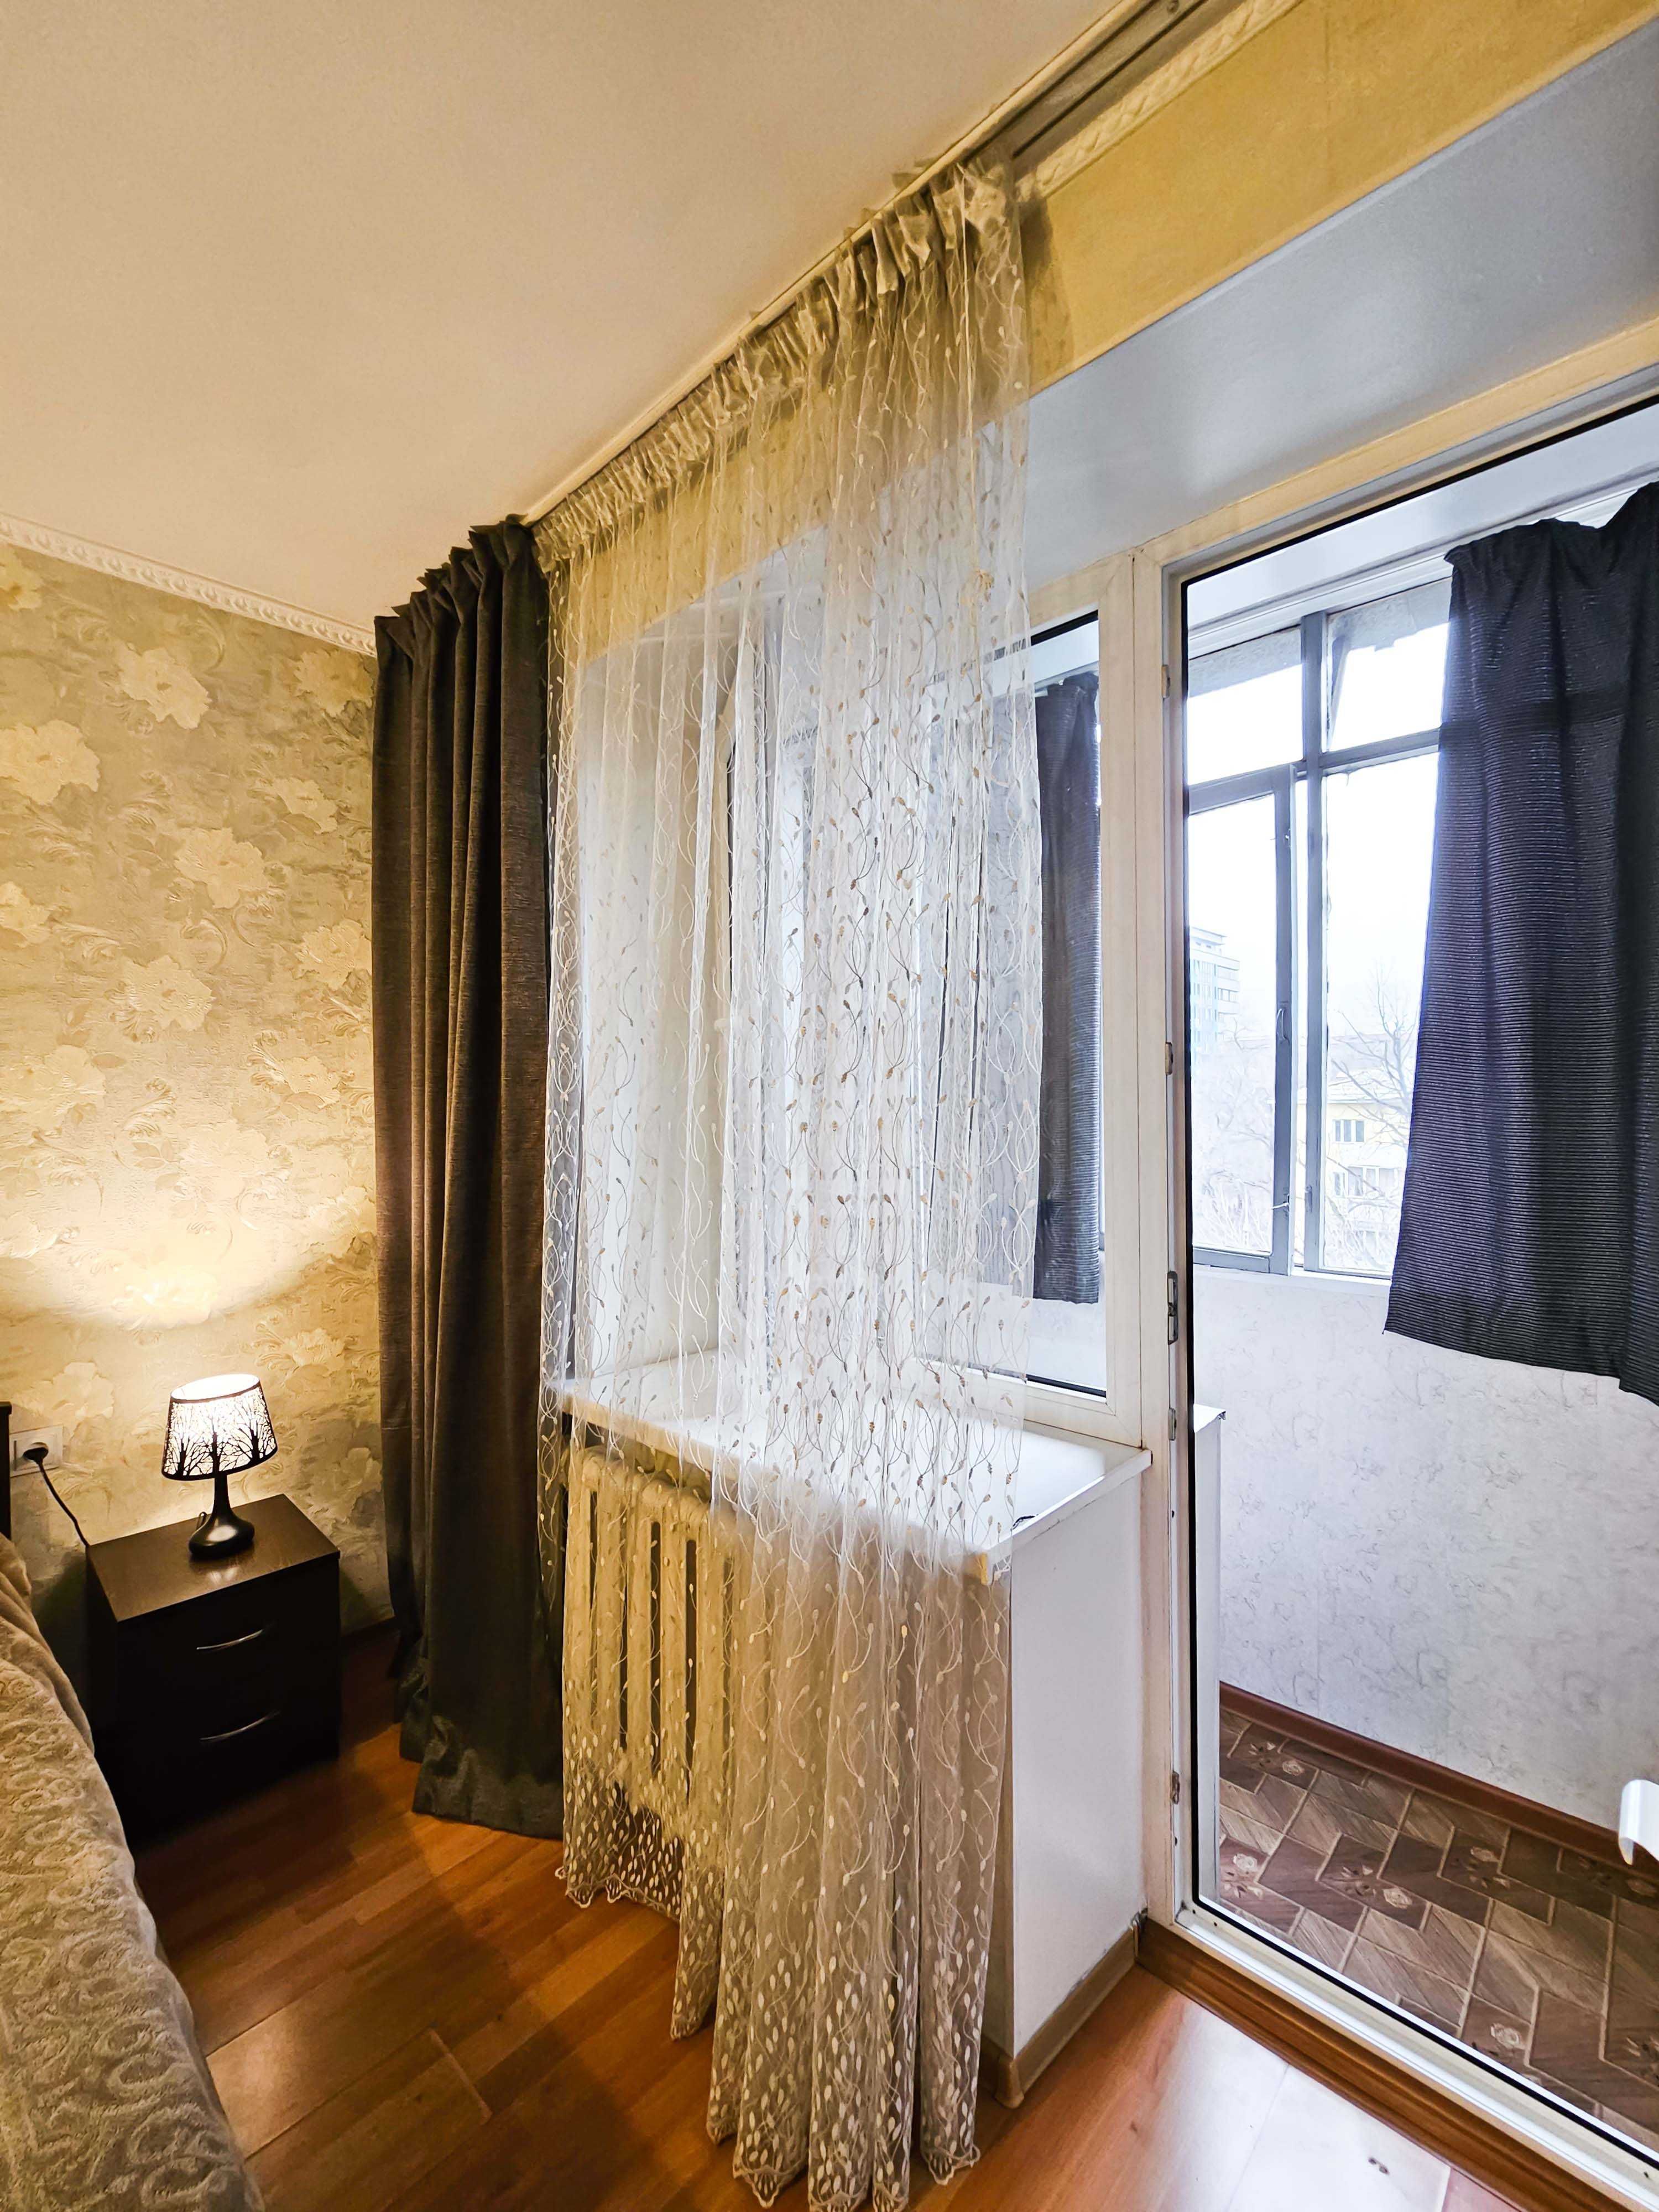 1 комнатная квартира в центре Алматы, ул. Гоголя - ул. Сейфуллина